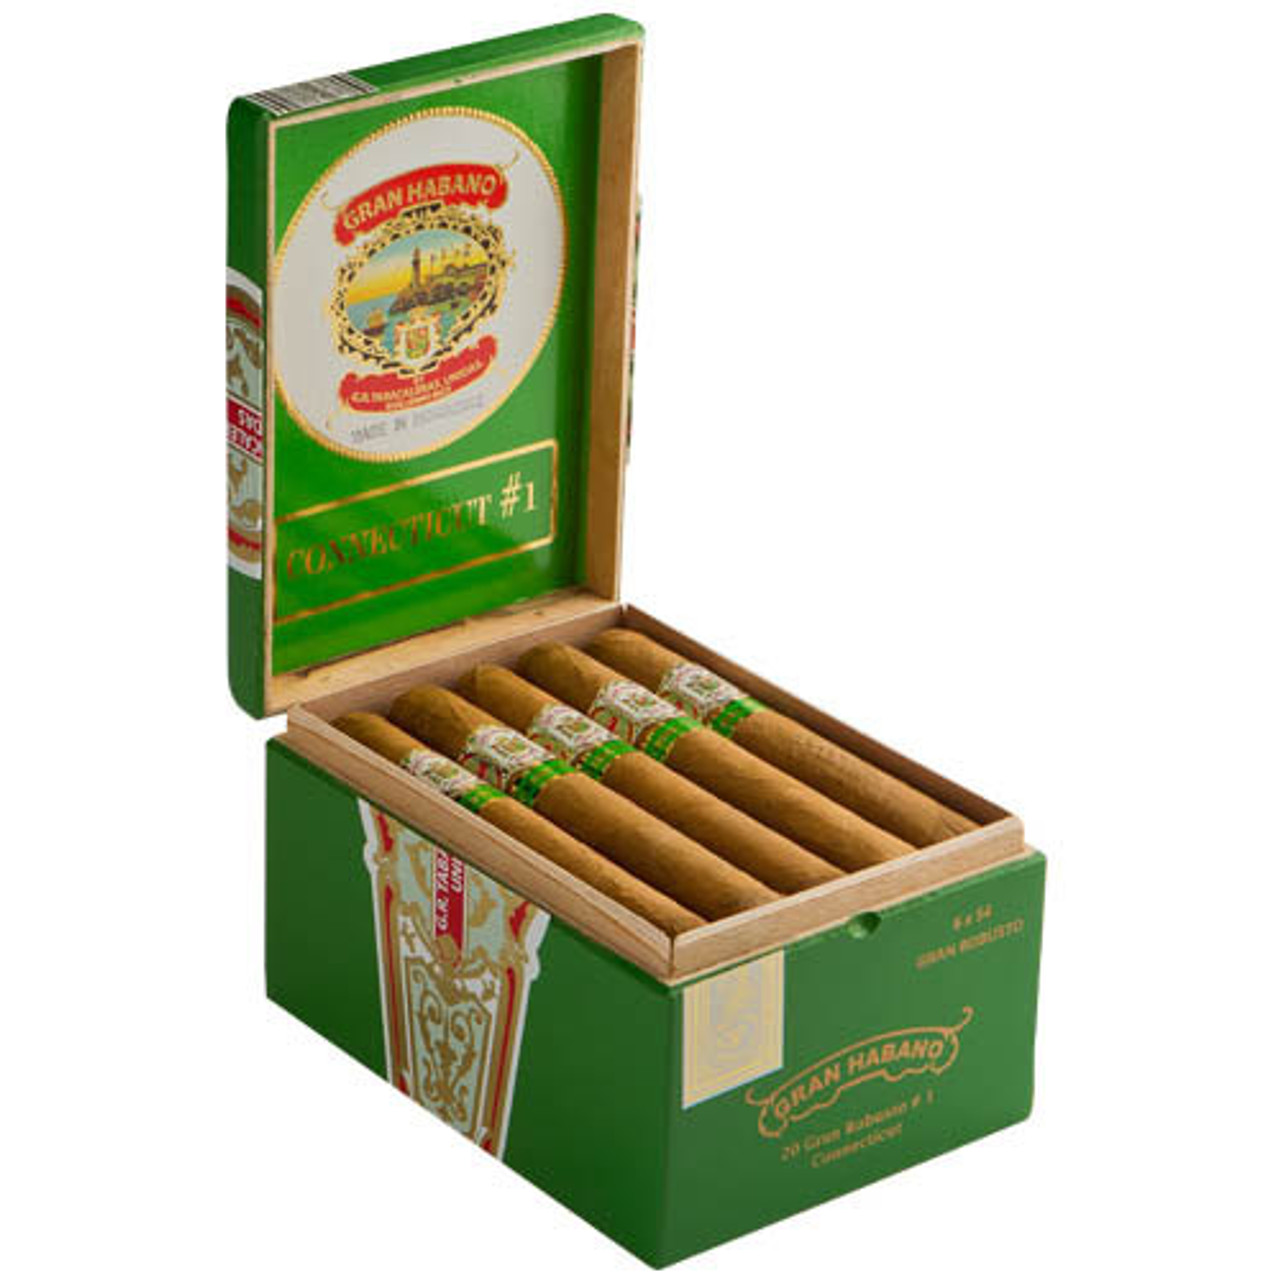 Gran Habano #1 Connecticut Lancero Cigars - 7.5 x 40 (Box of 20) *Box